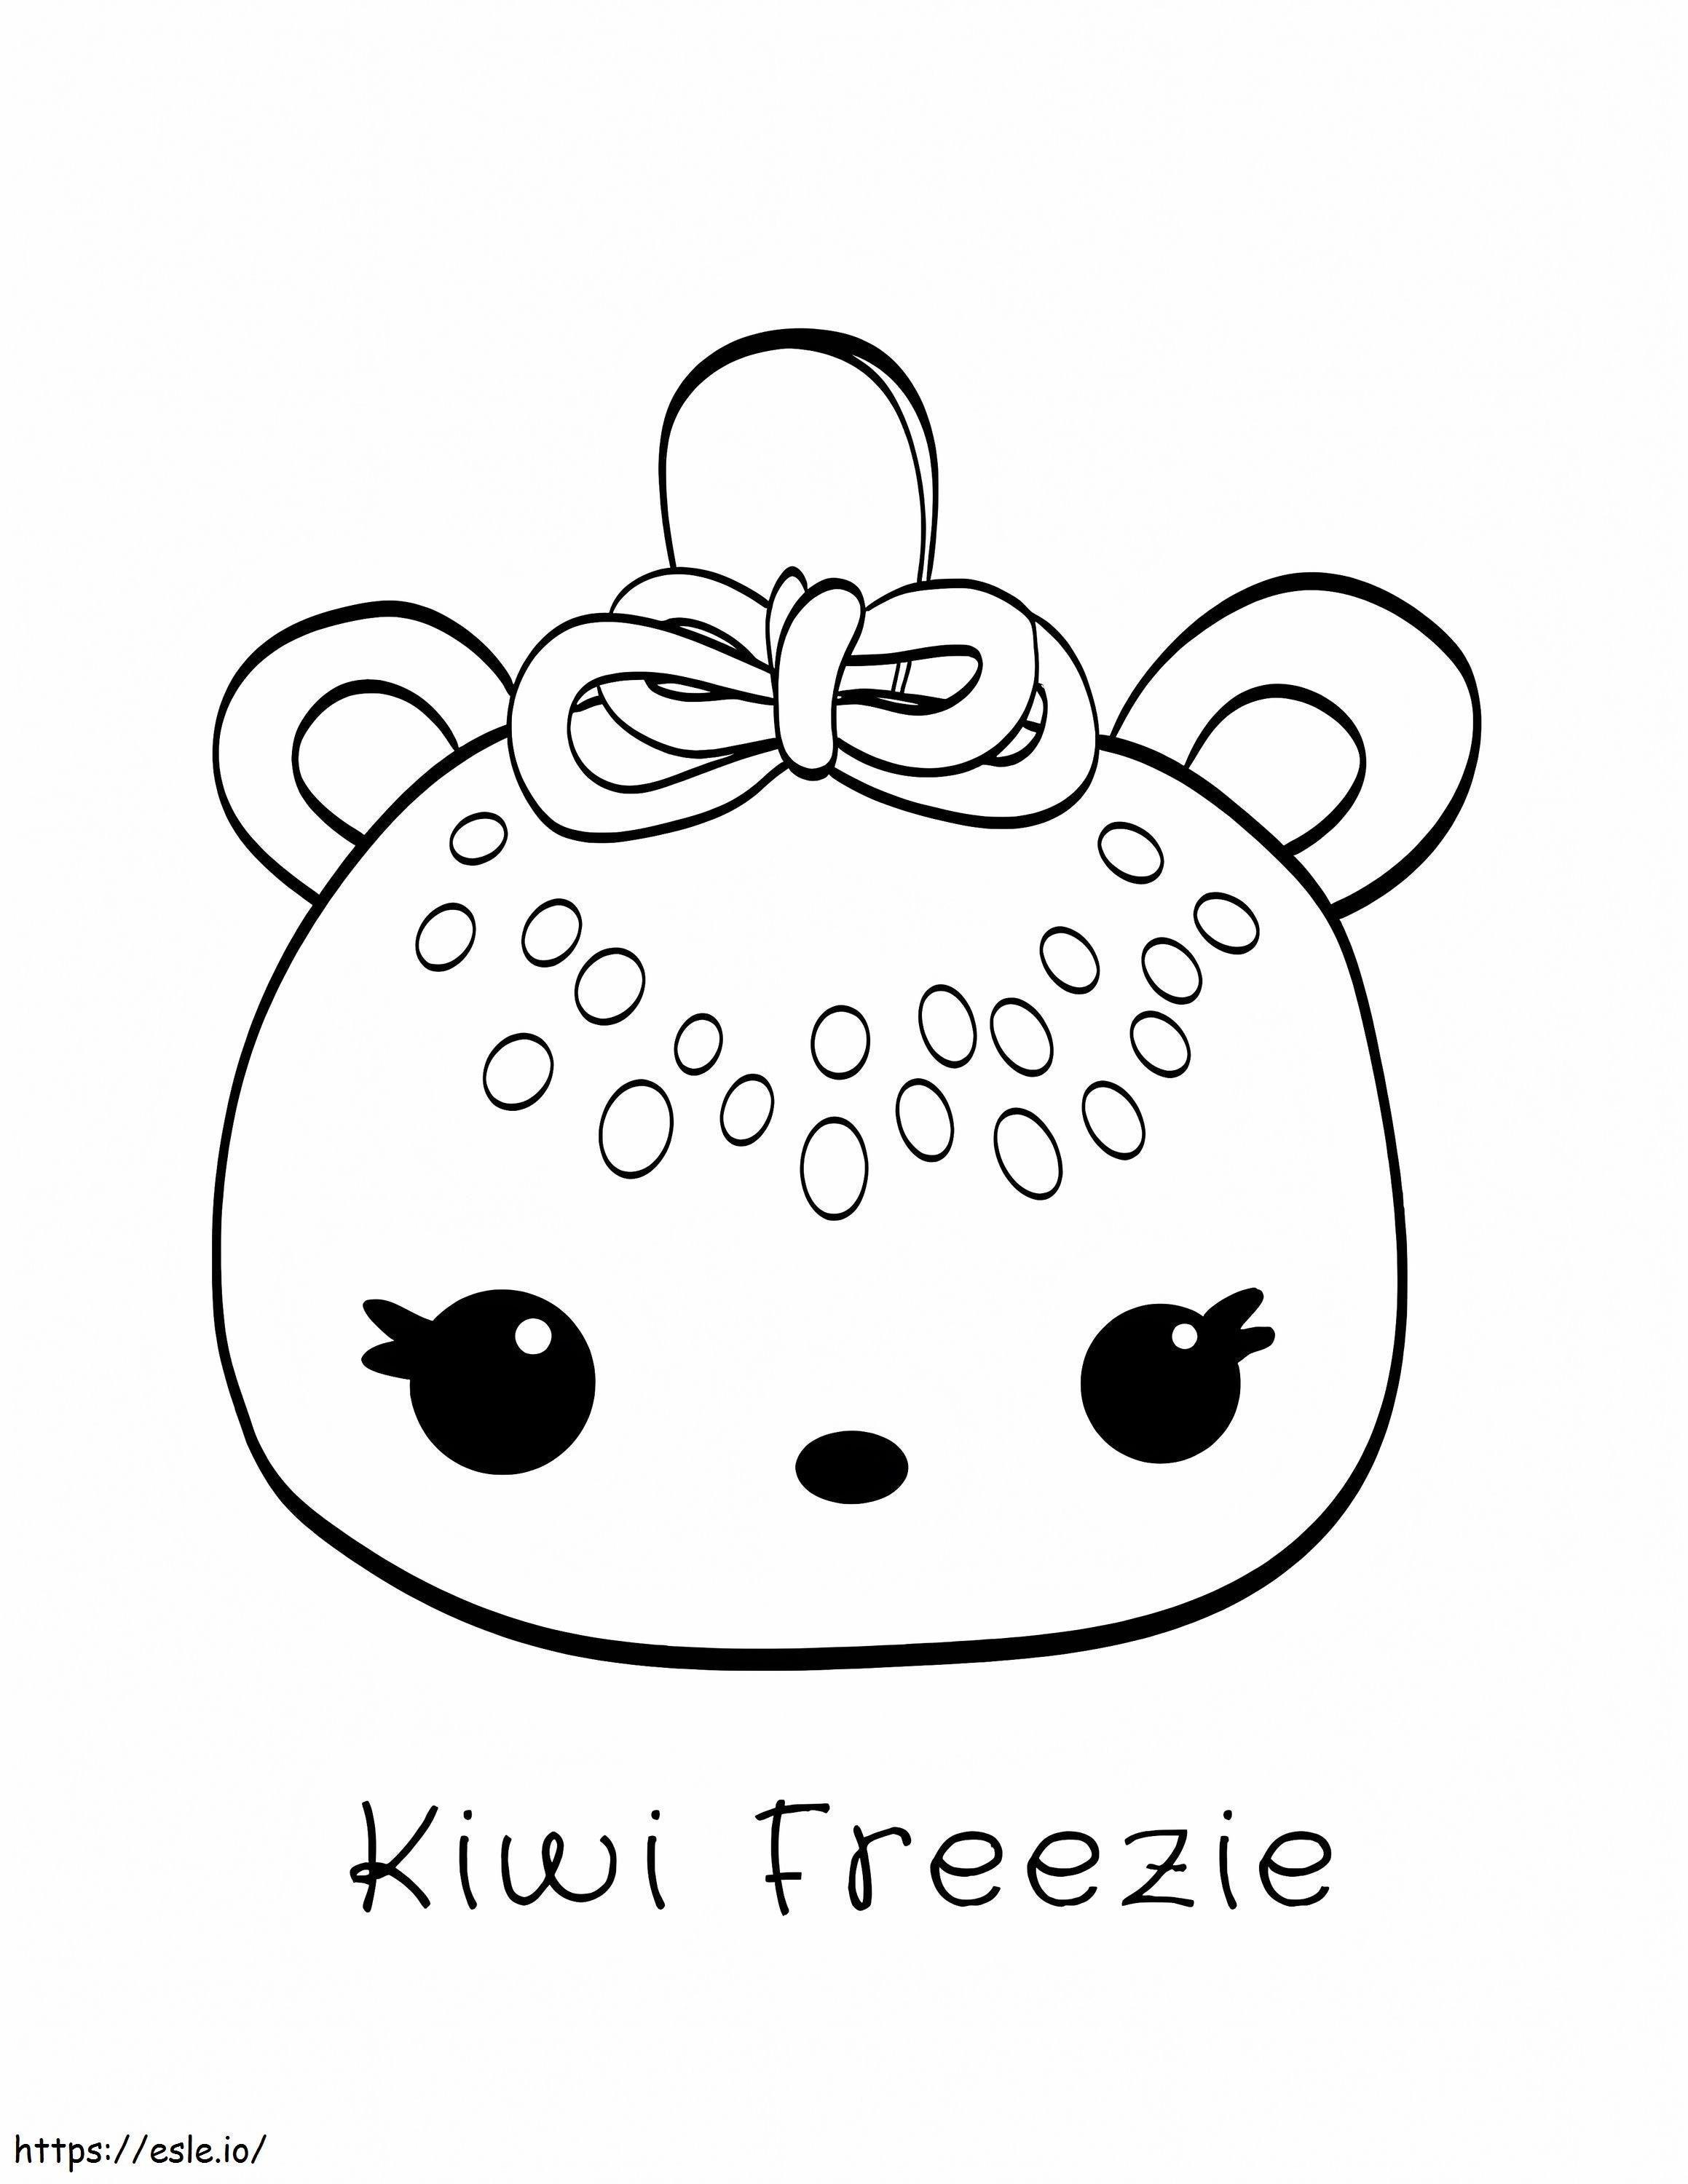 Kiwi Freezie kleurplaat kleurplaat